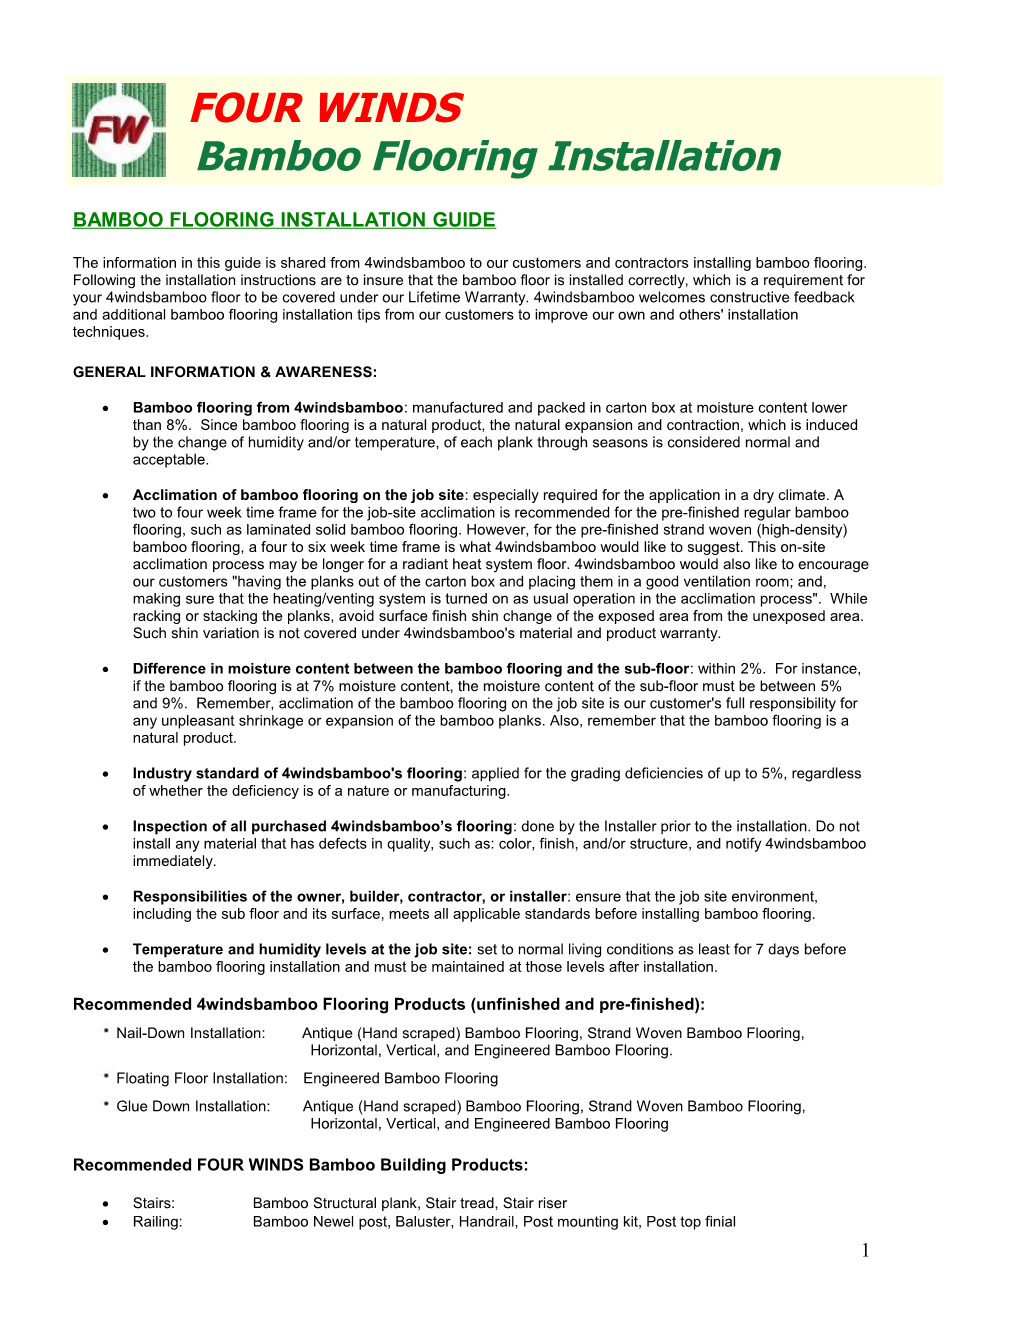 Bamboo Flooring Installation Guide